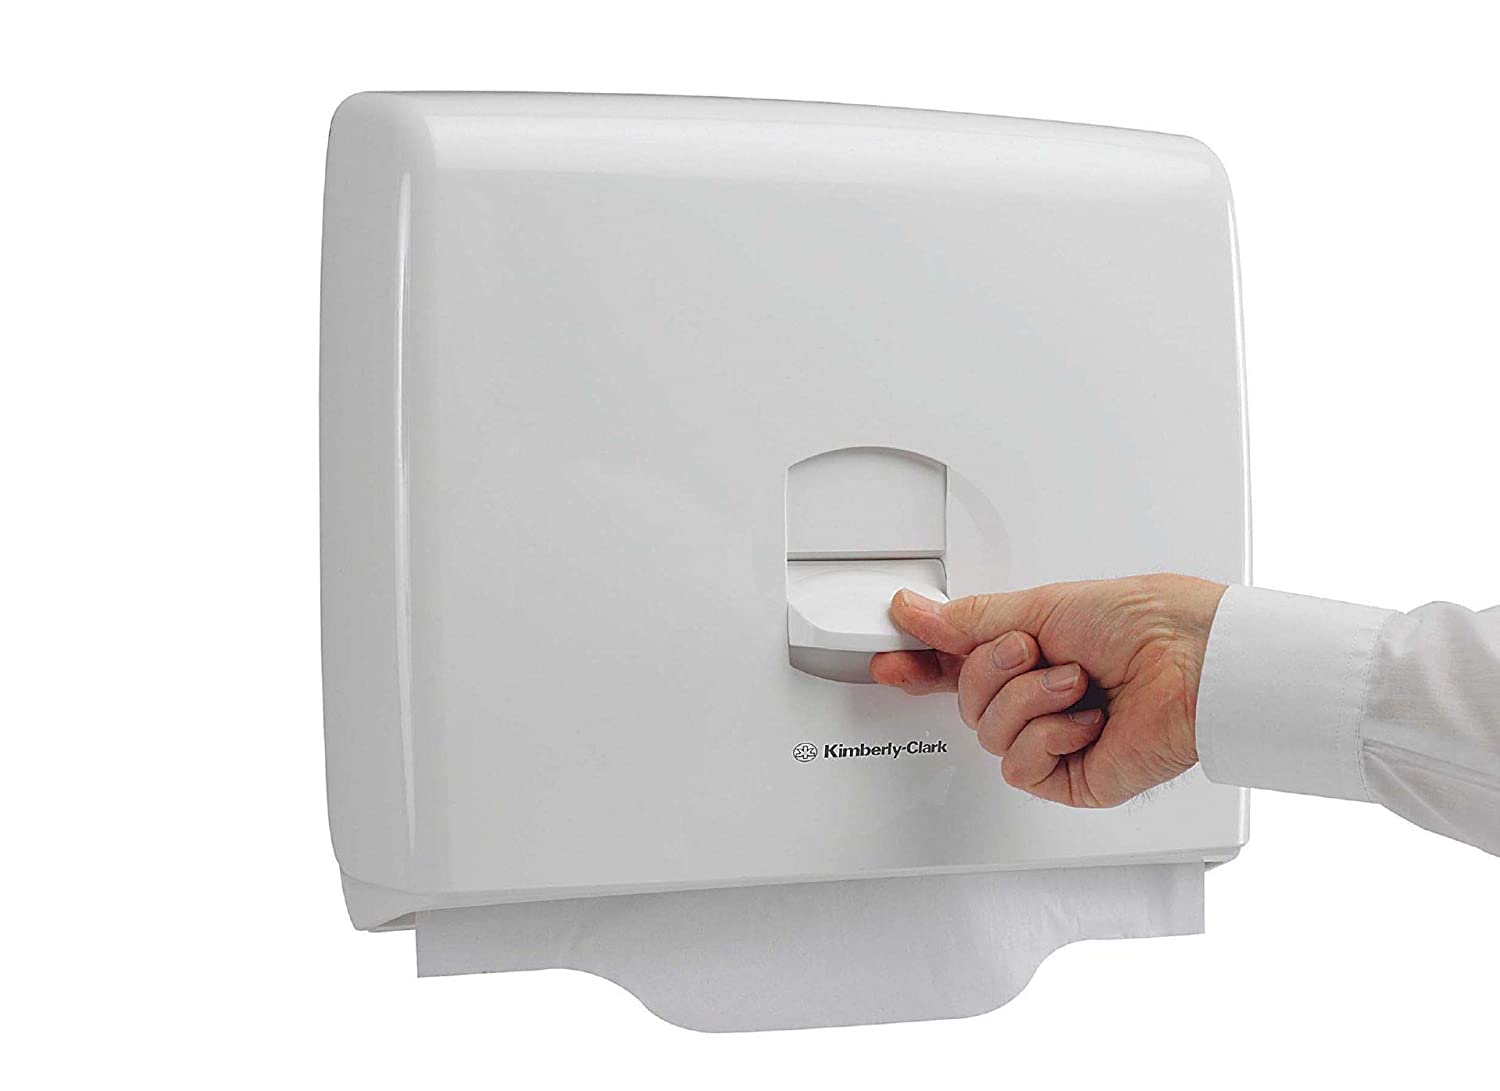 Kimberly-Clark Aquarius White Personal Toilet Seat Cover Dispenser 